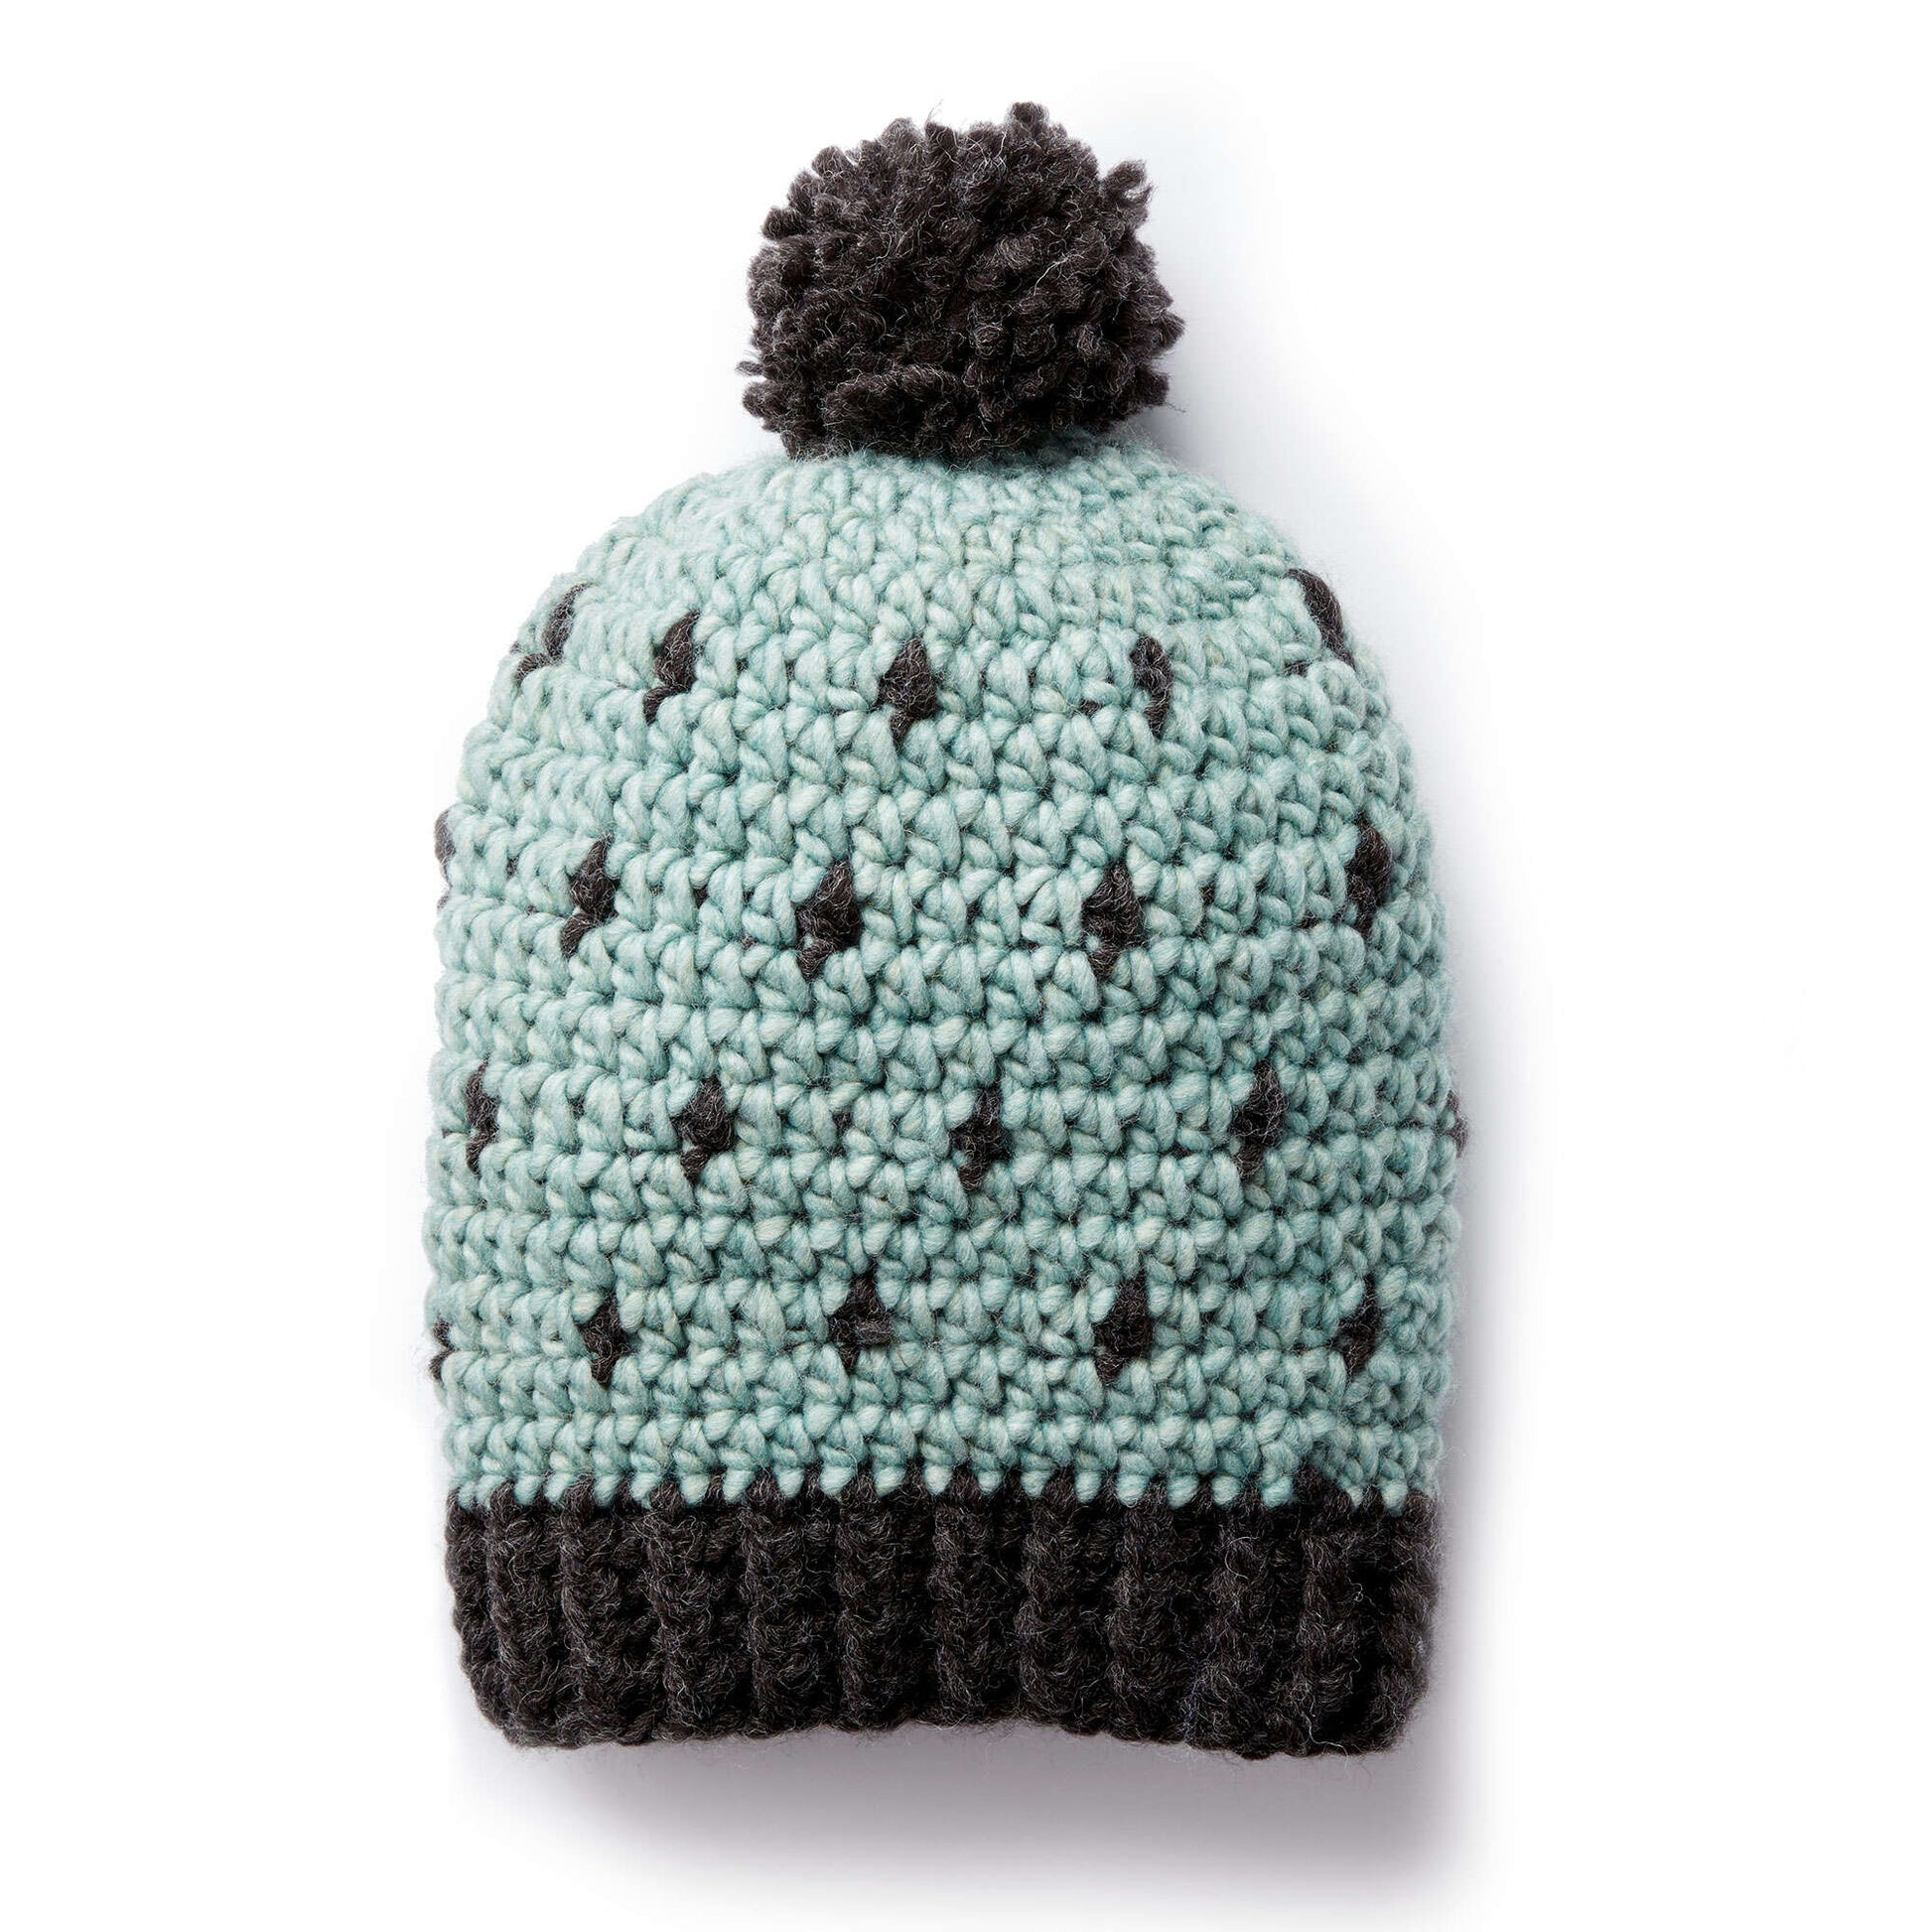 Bernat Cozy Crochet Hat Crochet Hat made in Bernat Roving yarn